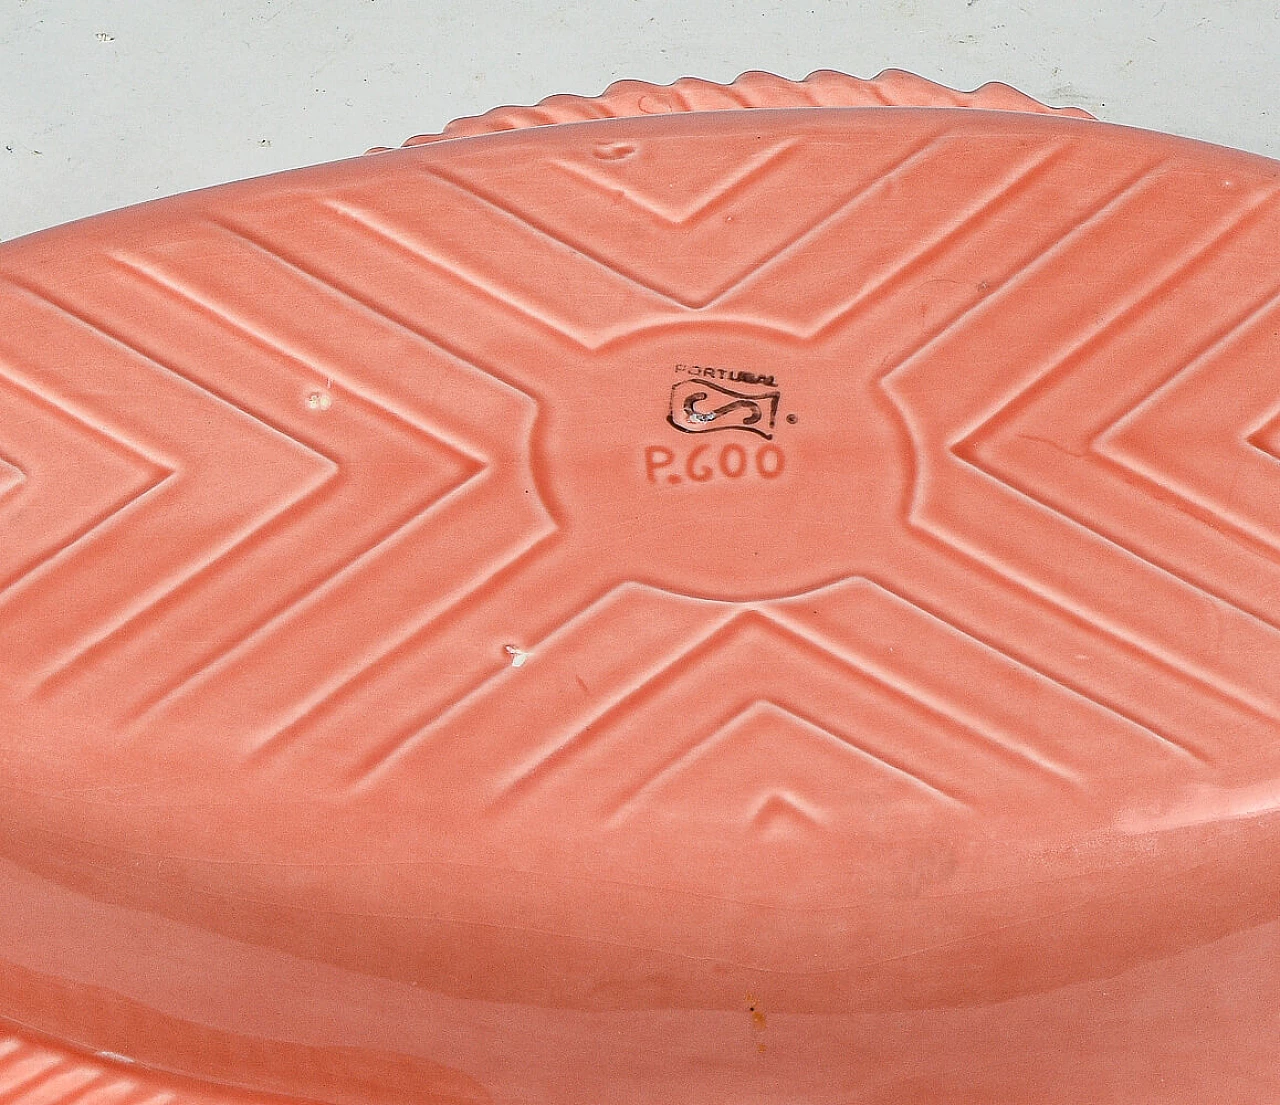 Pink ceramic fish-shaped plates 8